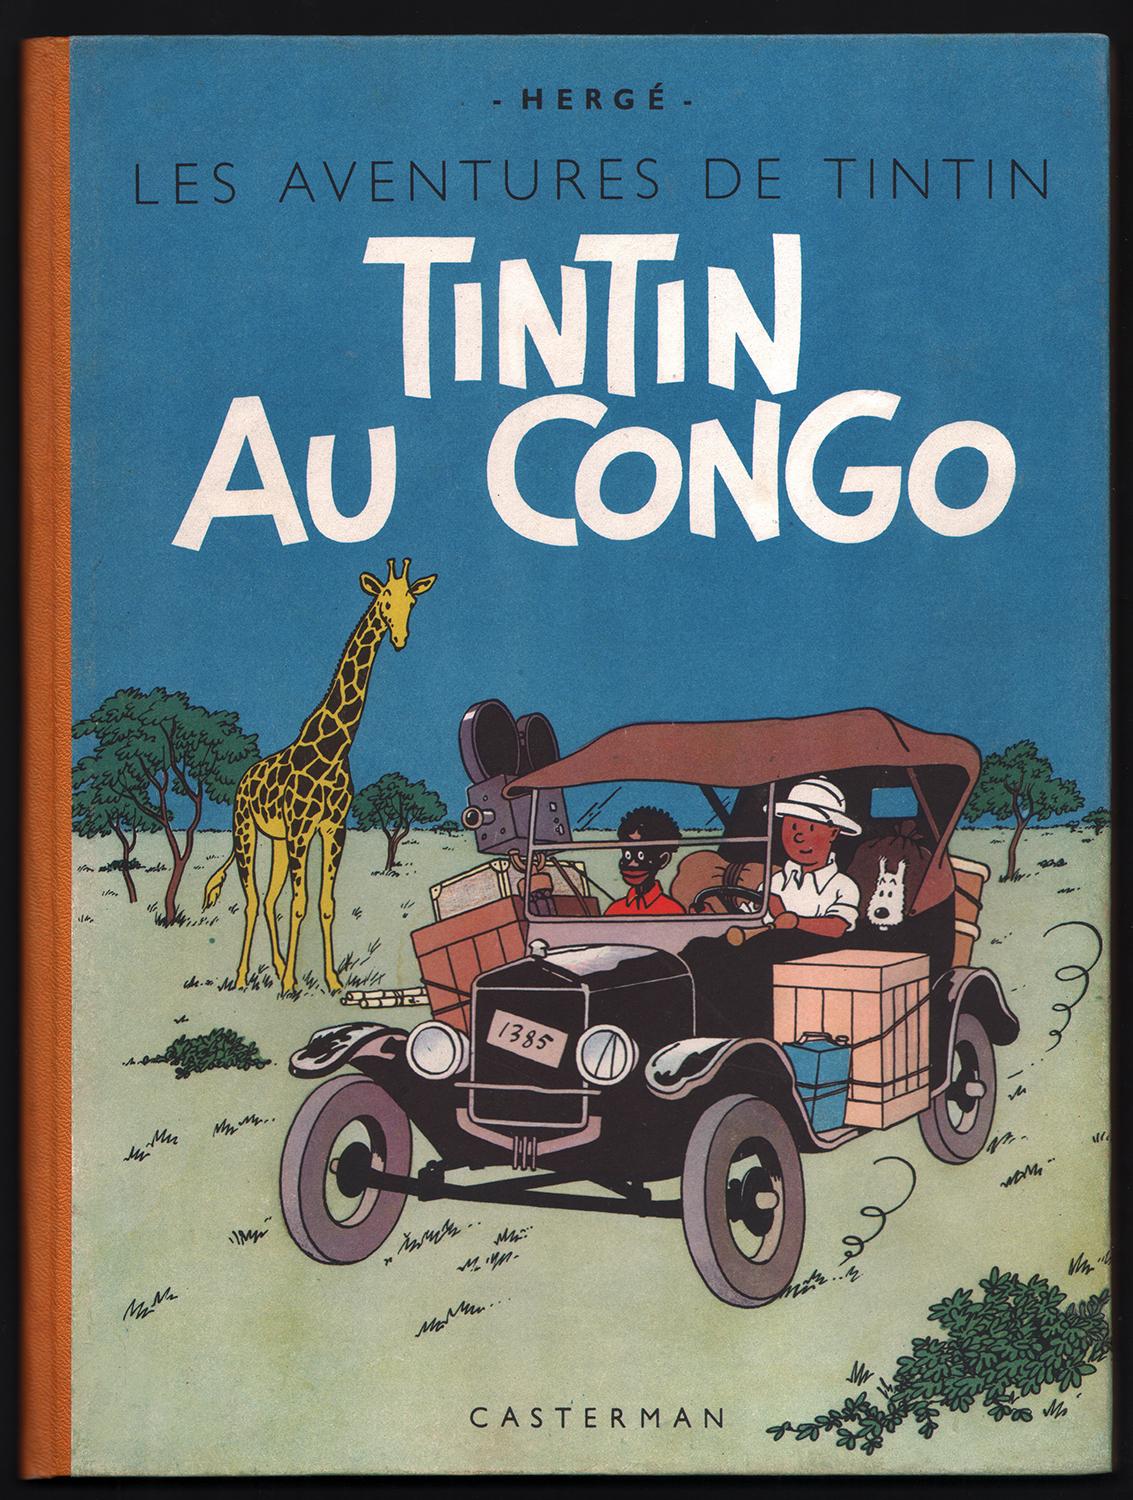 Les Aventures de Tintin : Tintin au Congo